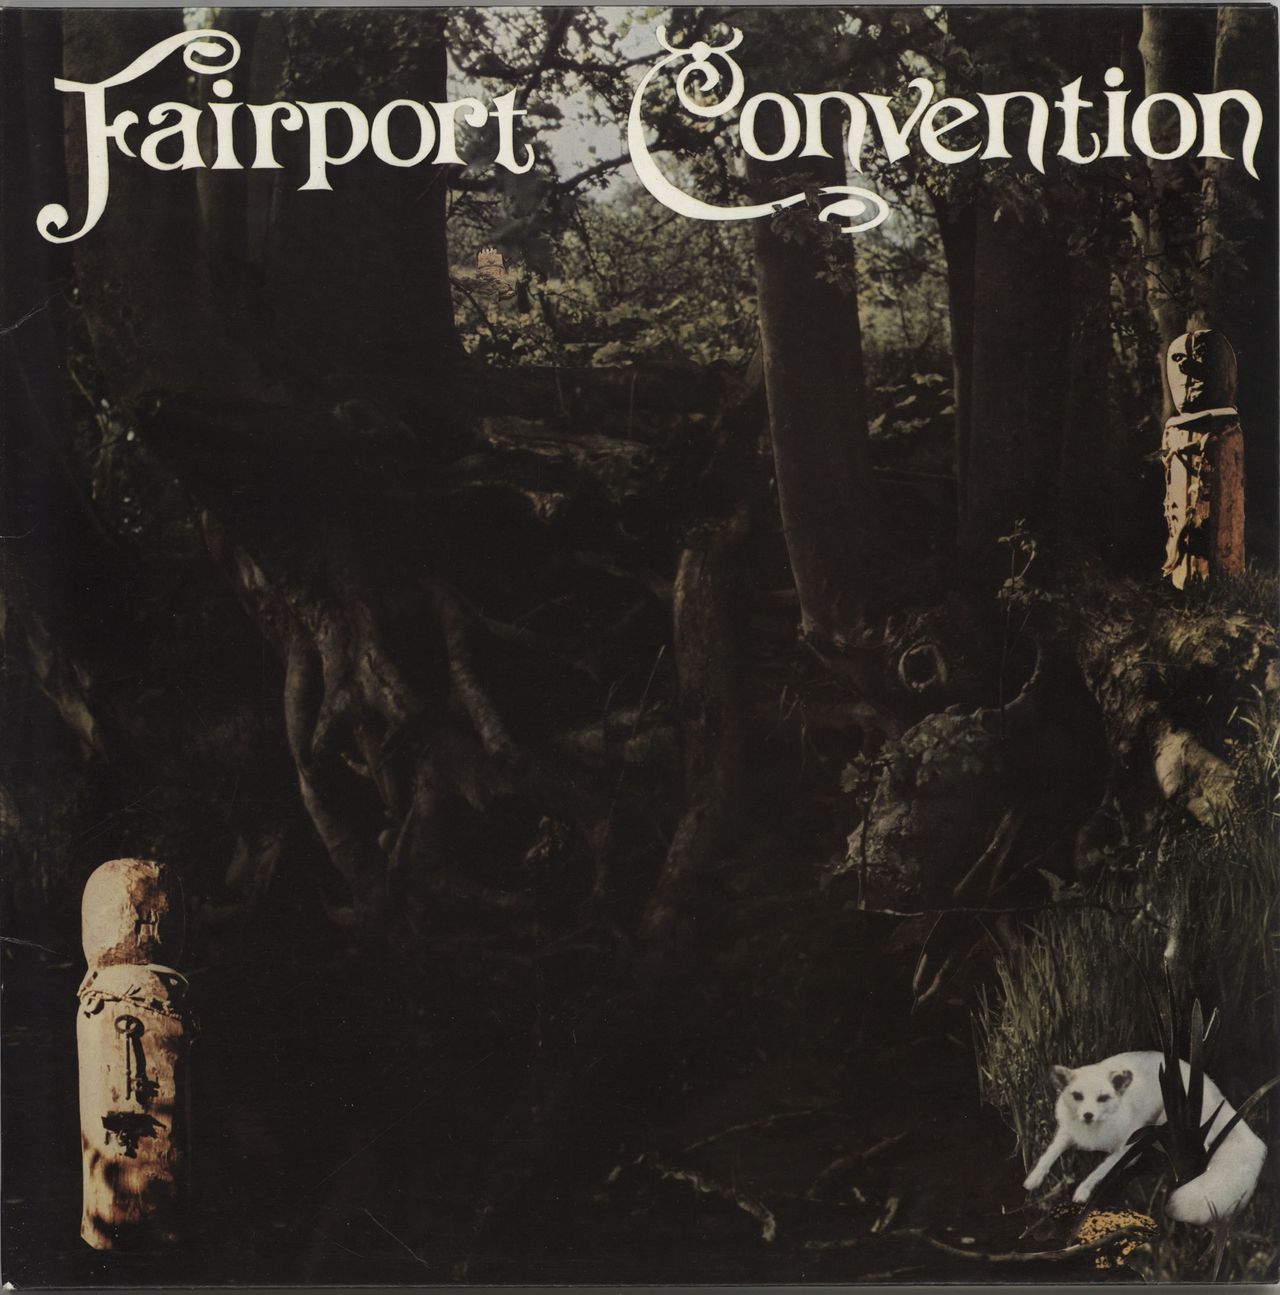 Fairport Convention Farewell Farewell UK vinyl LP album (LP record) BEAR22